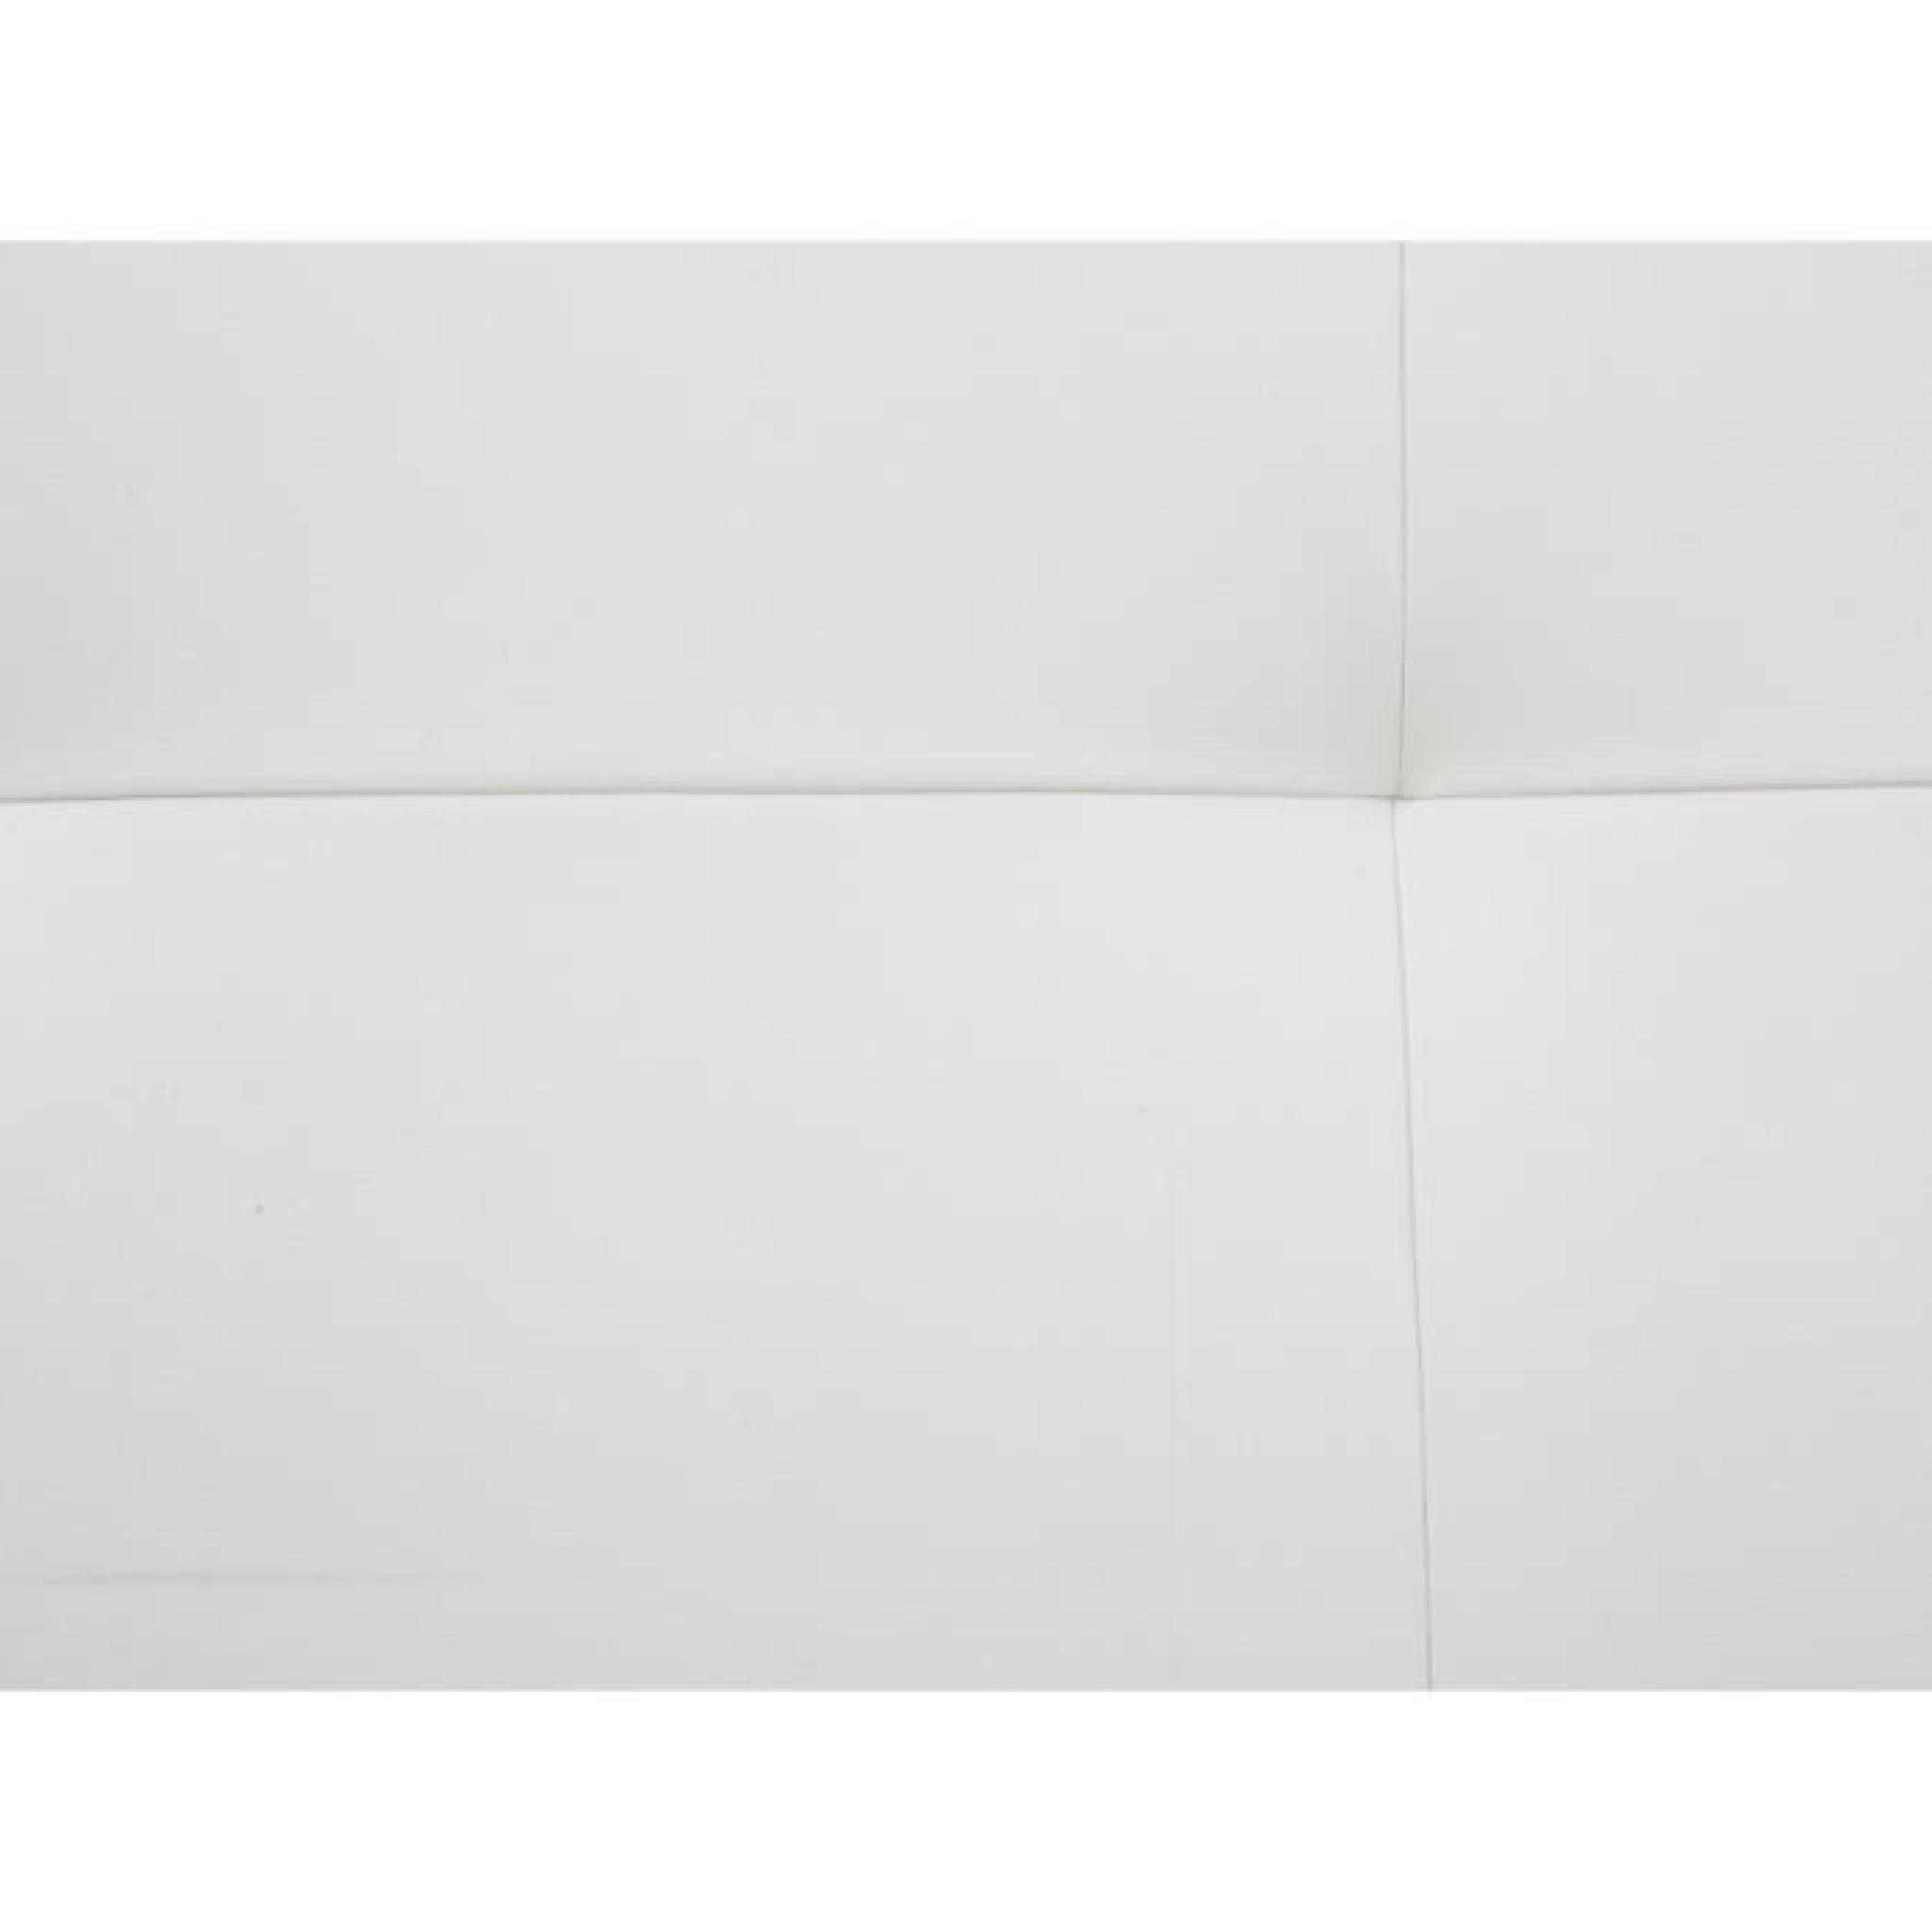 Lit SORIA - 160*200 cm - Simili blanc pas cher